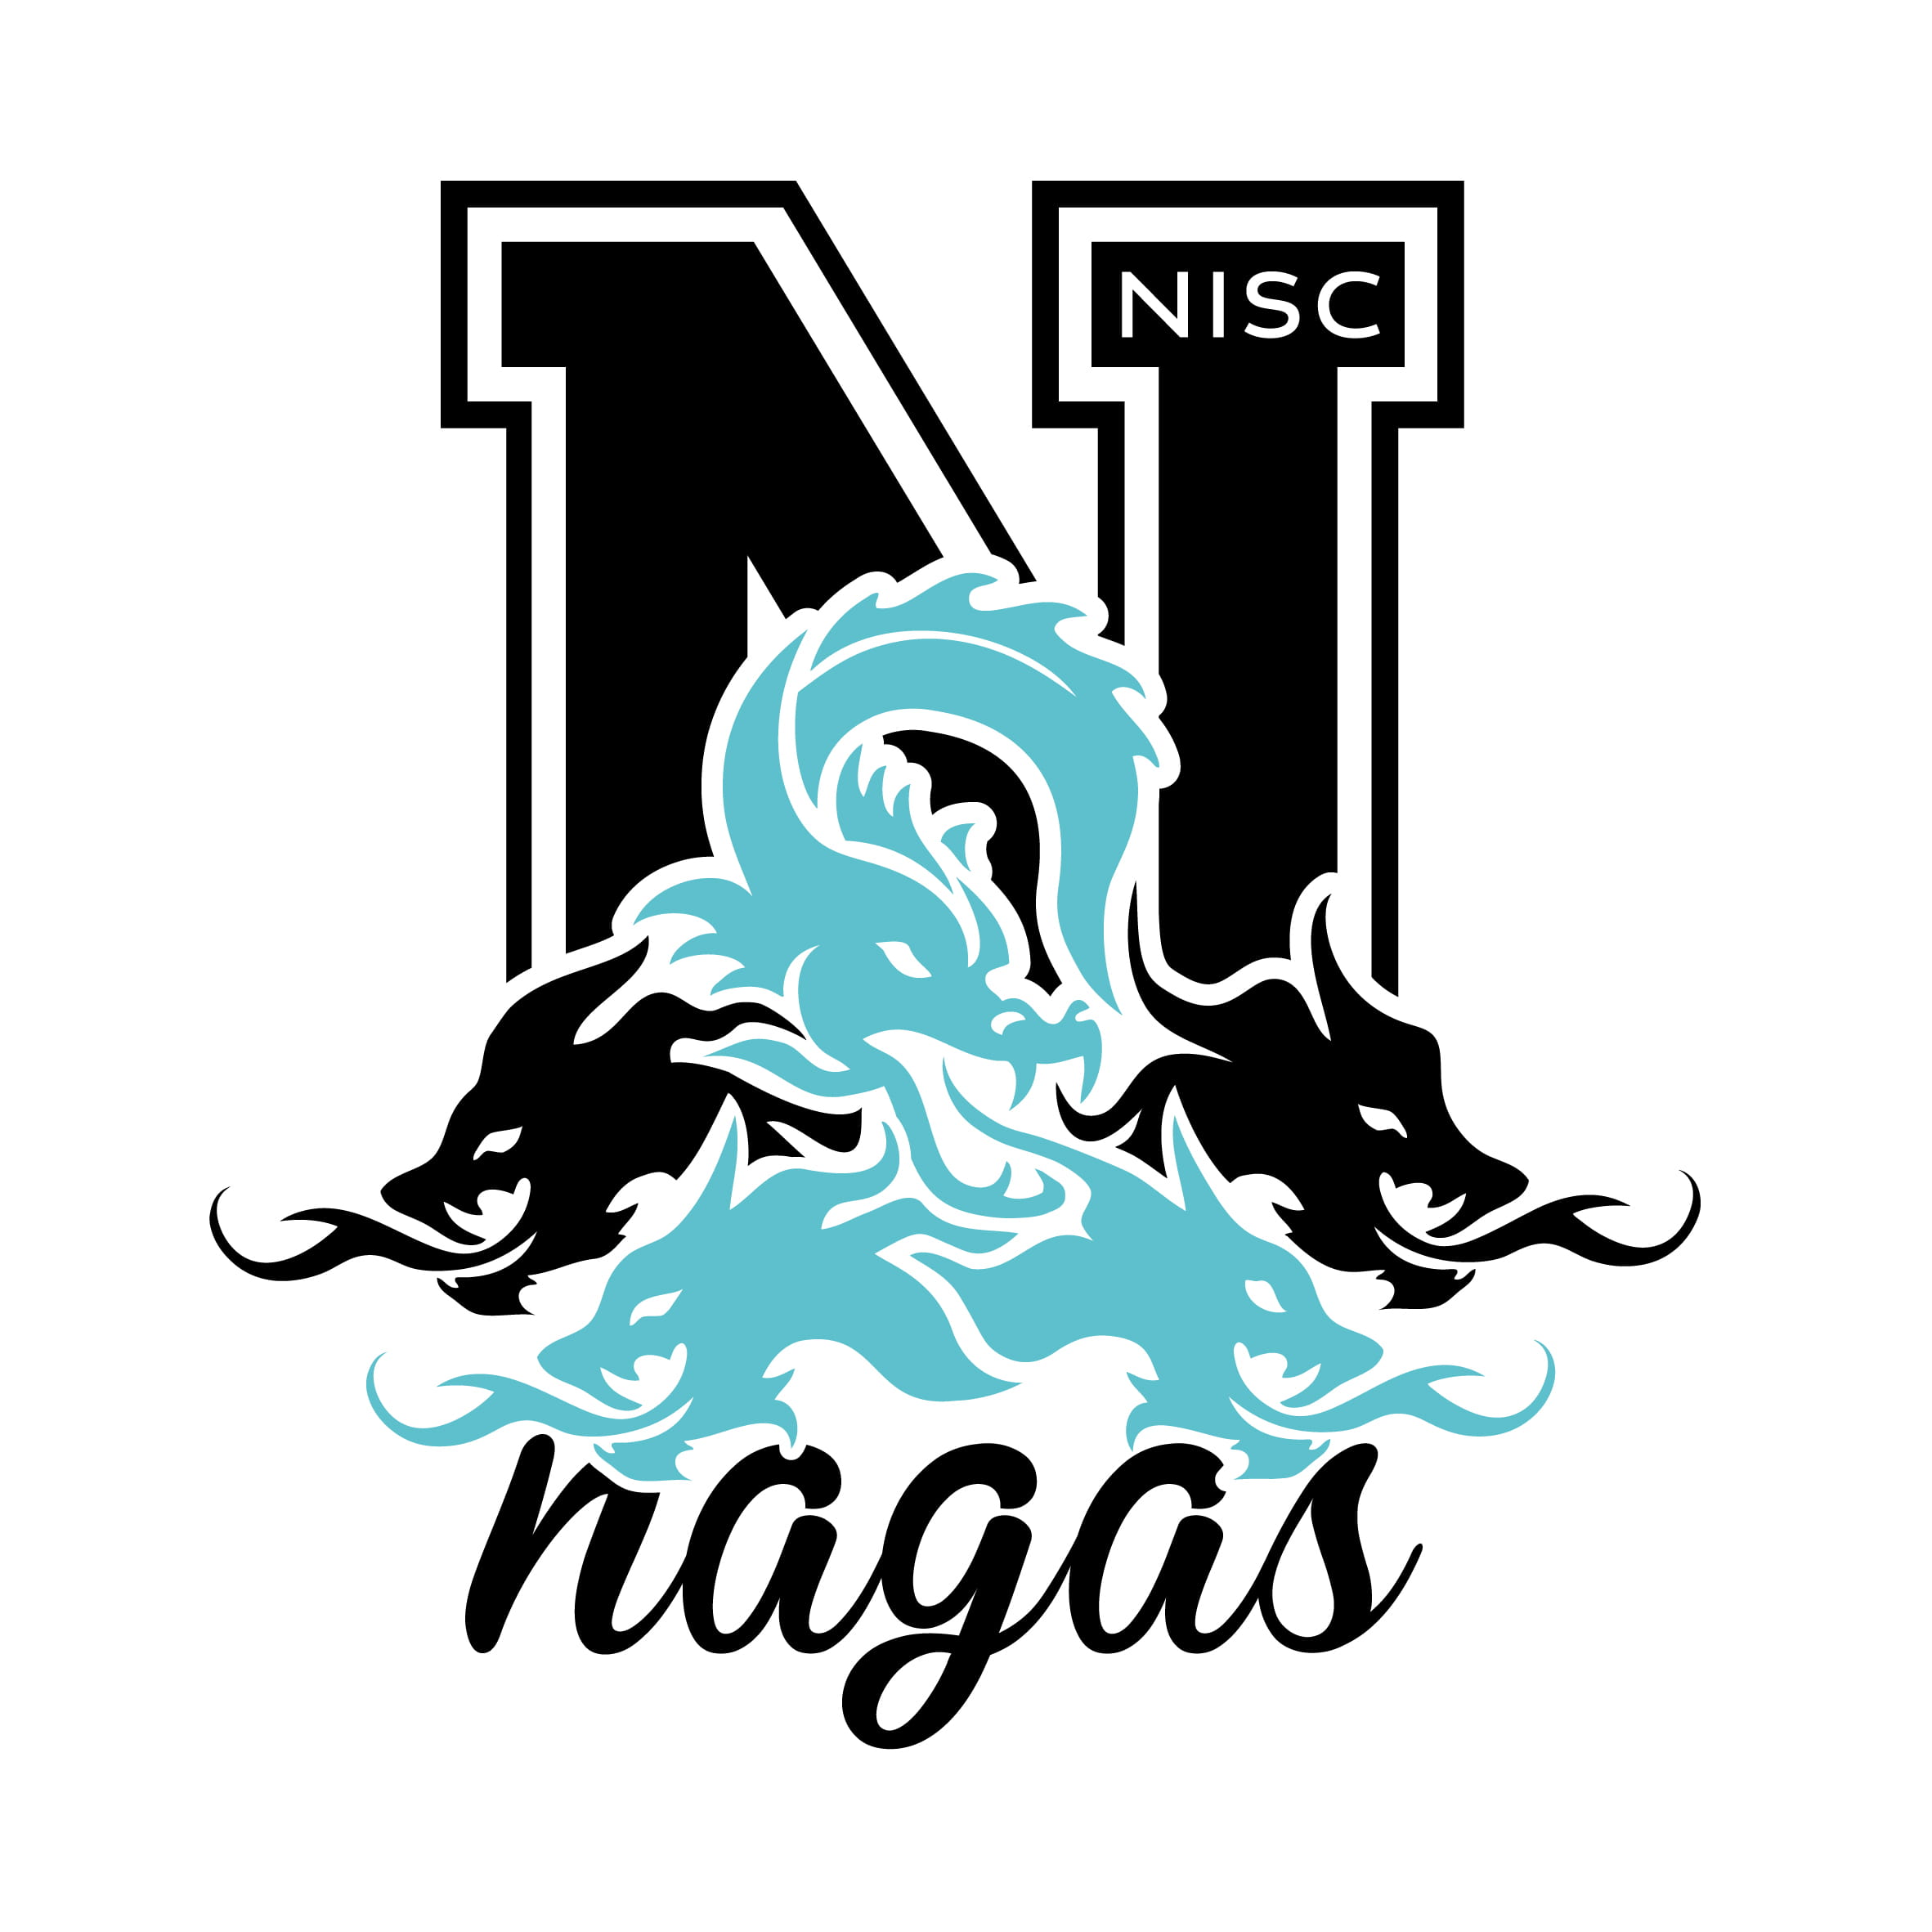 Nagas swim team win medals at ISSAPP meet-nagas-swim-team-win-medals-at-issapp-meet-Copy of Copy of NISC nagas logo01